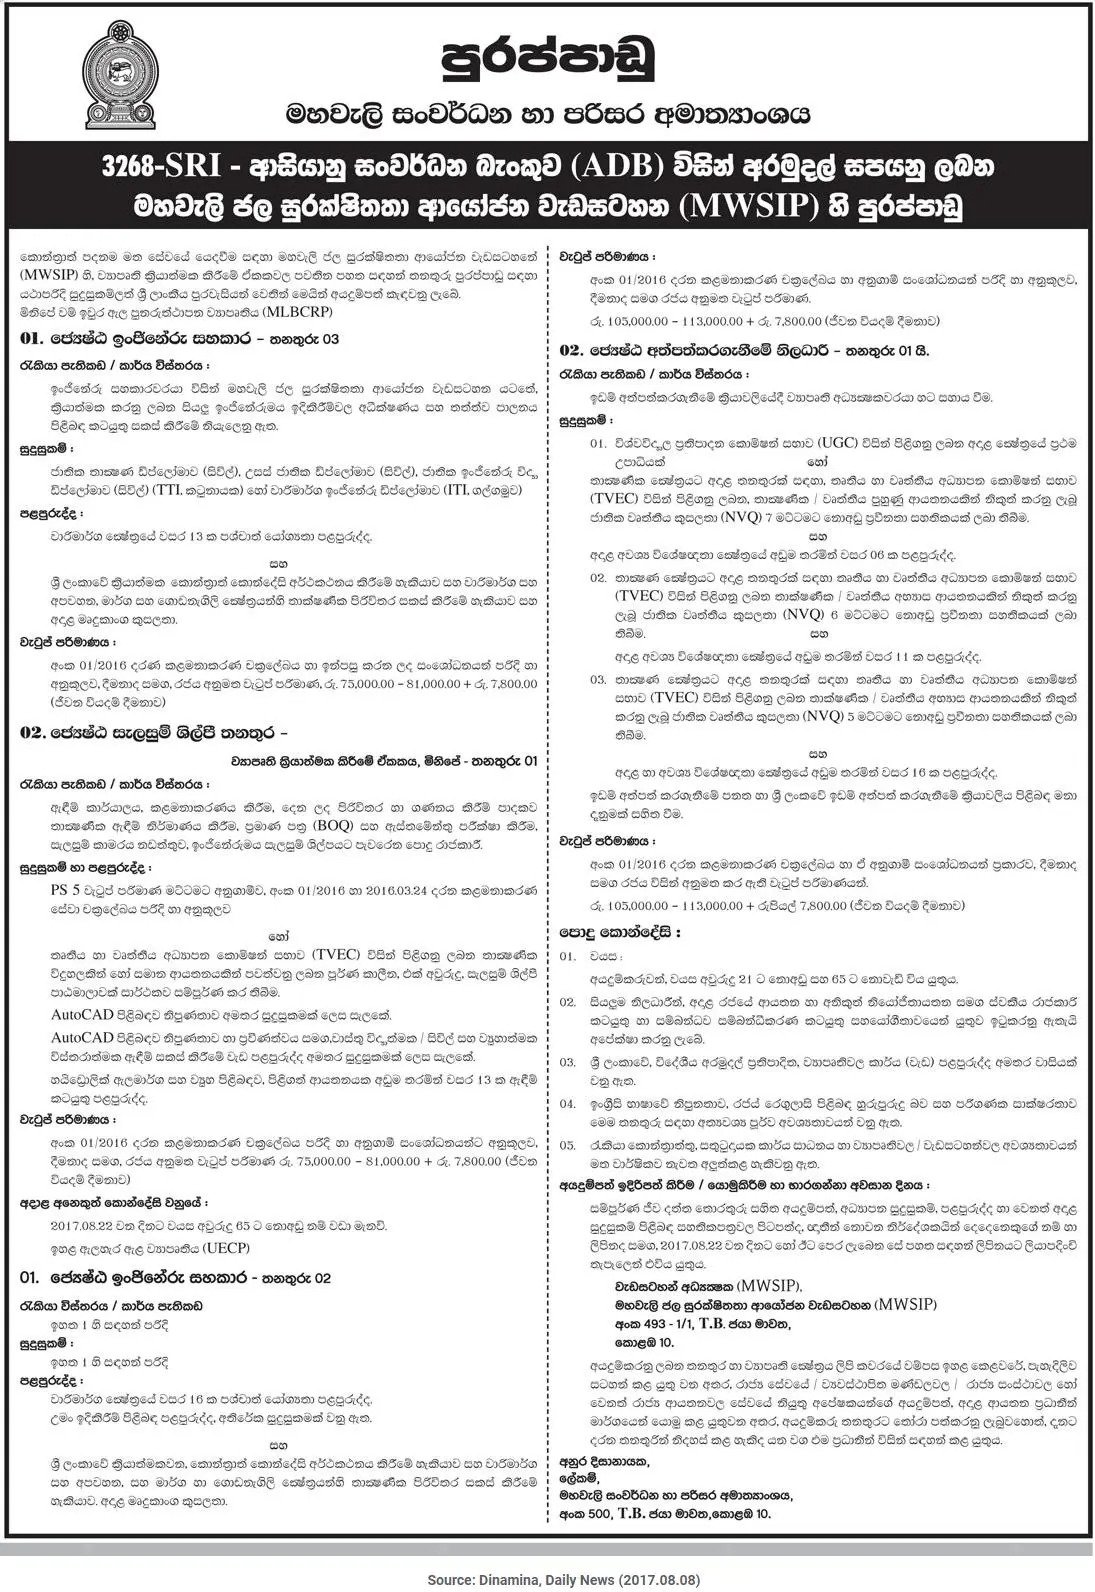 Vacancies at Ministry of Mahaweli Development & Environment